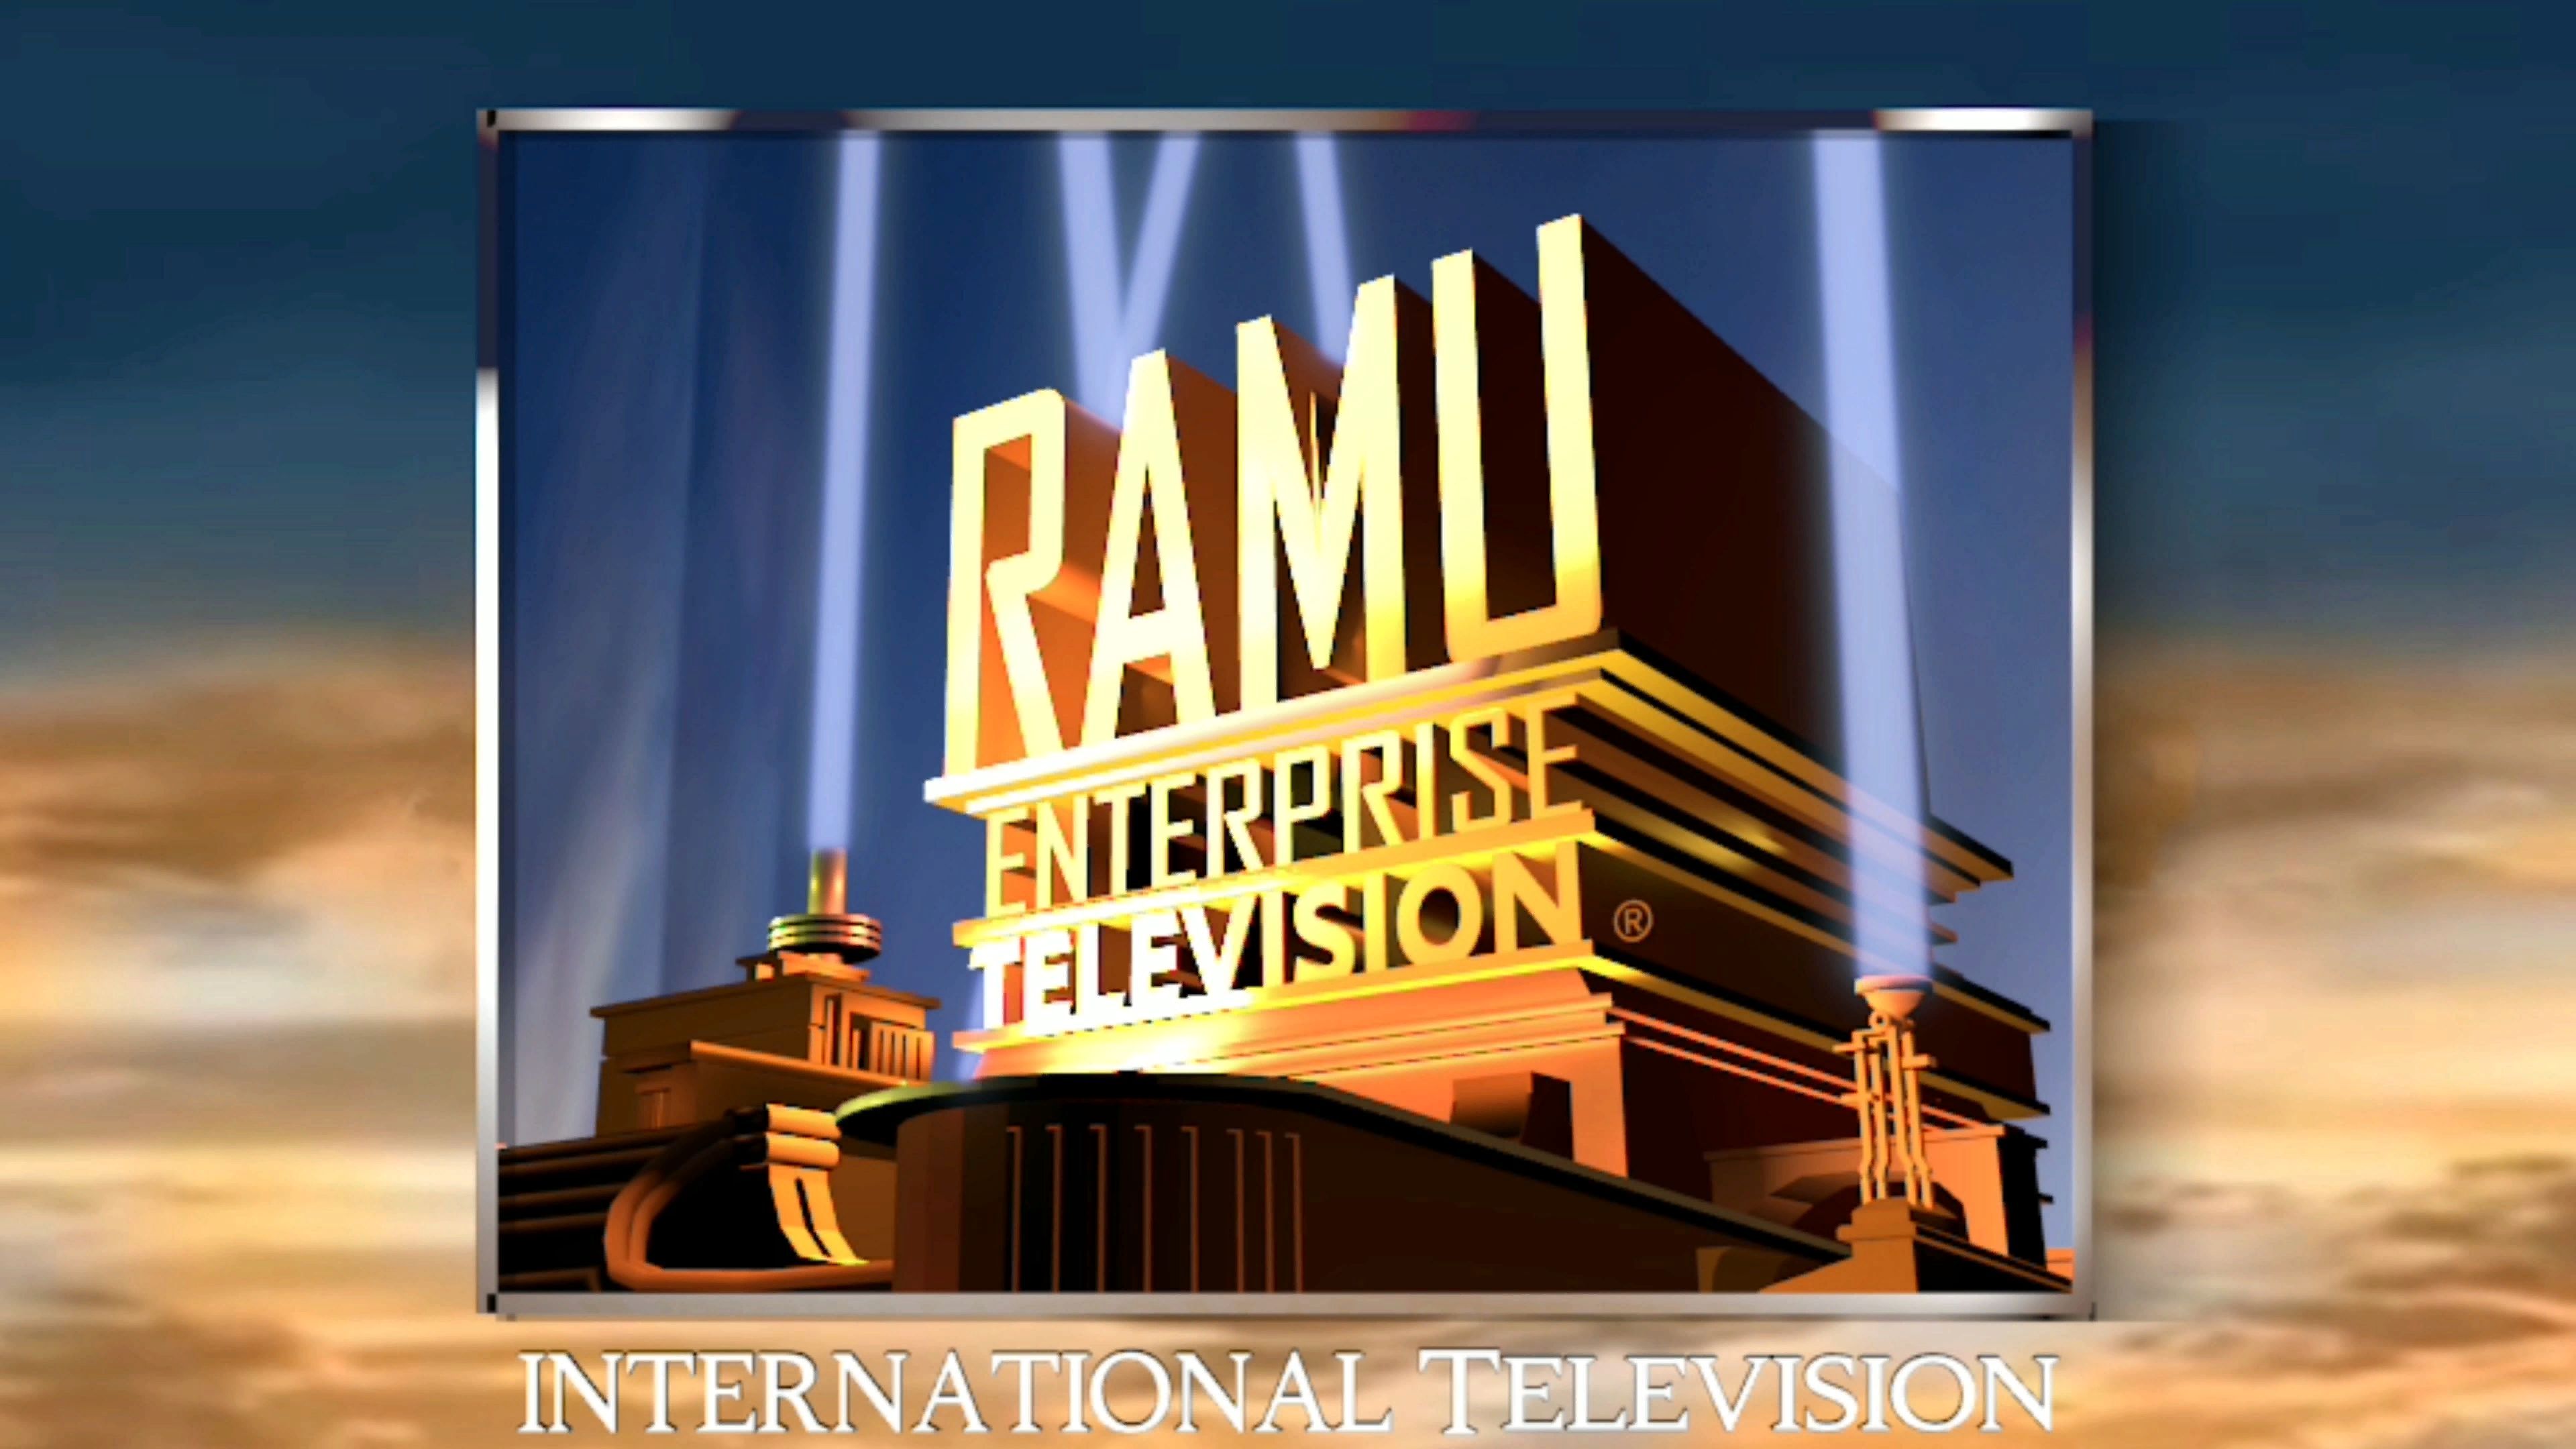 Disney Fox Films (Ramu Enterprises Variant) - BiliBili